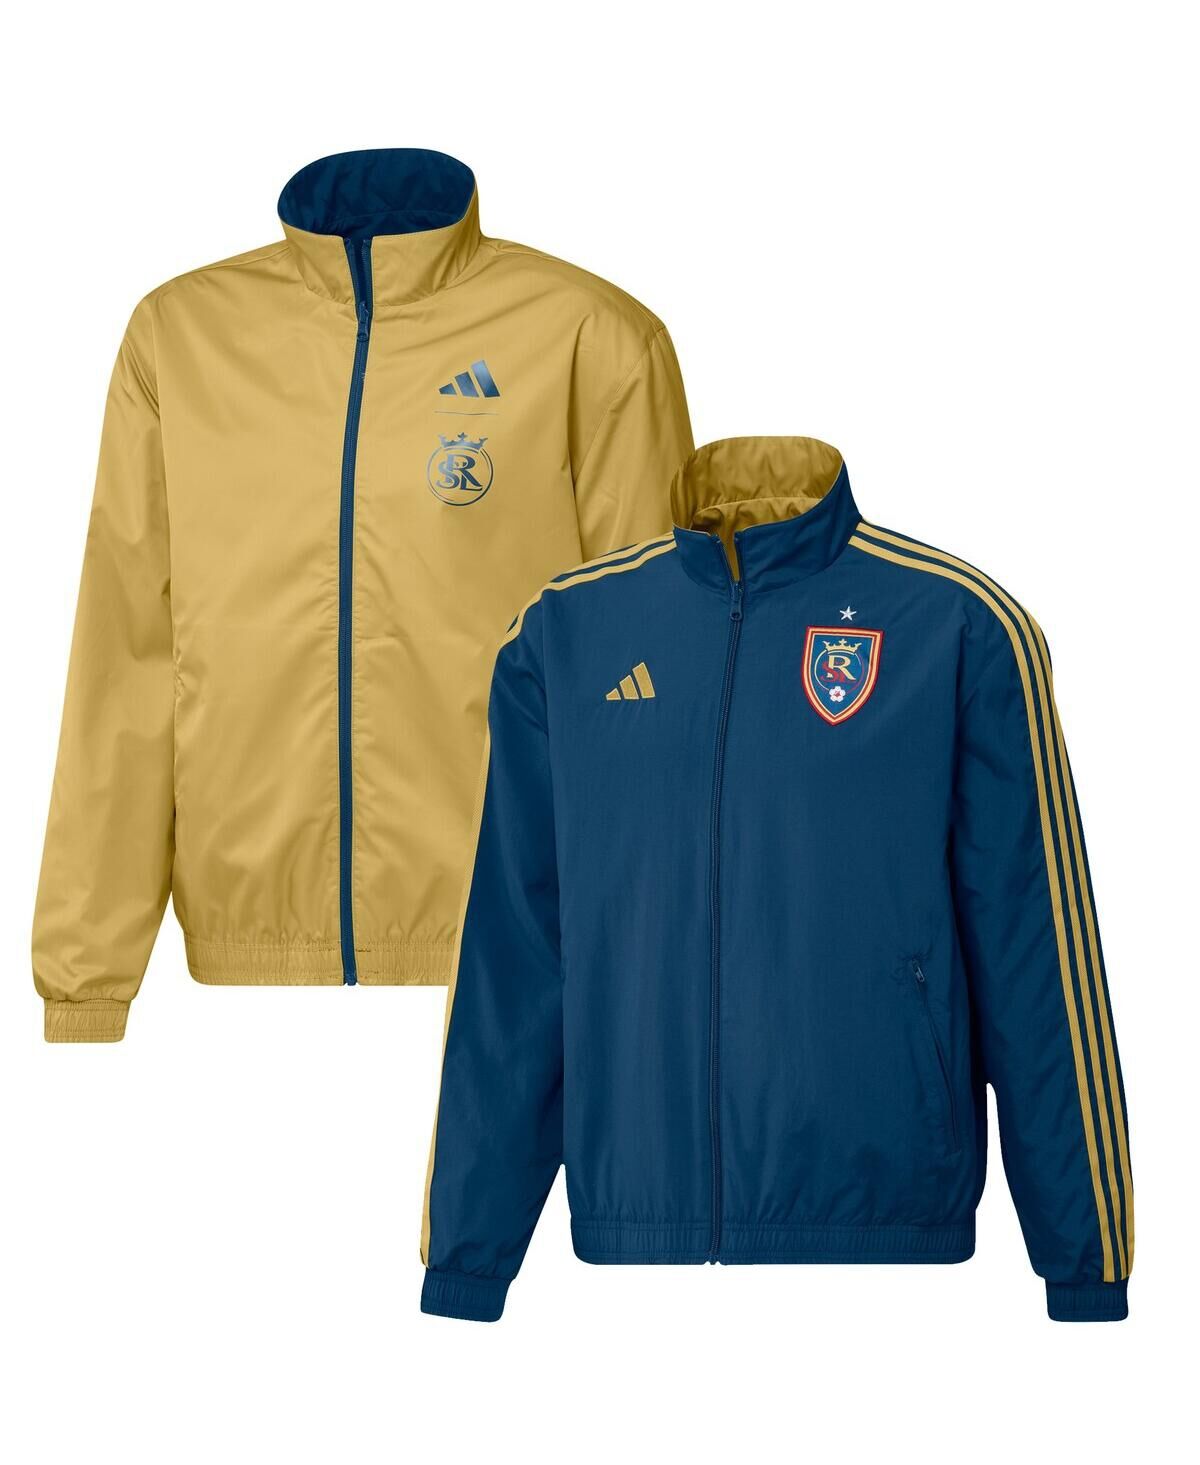 Adidas Men's adidas Navy and Gold Real Salt Lake 2023 On-Field Anthem Full-Zip Reversible Team Jacket - Navy, Gold